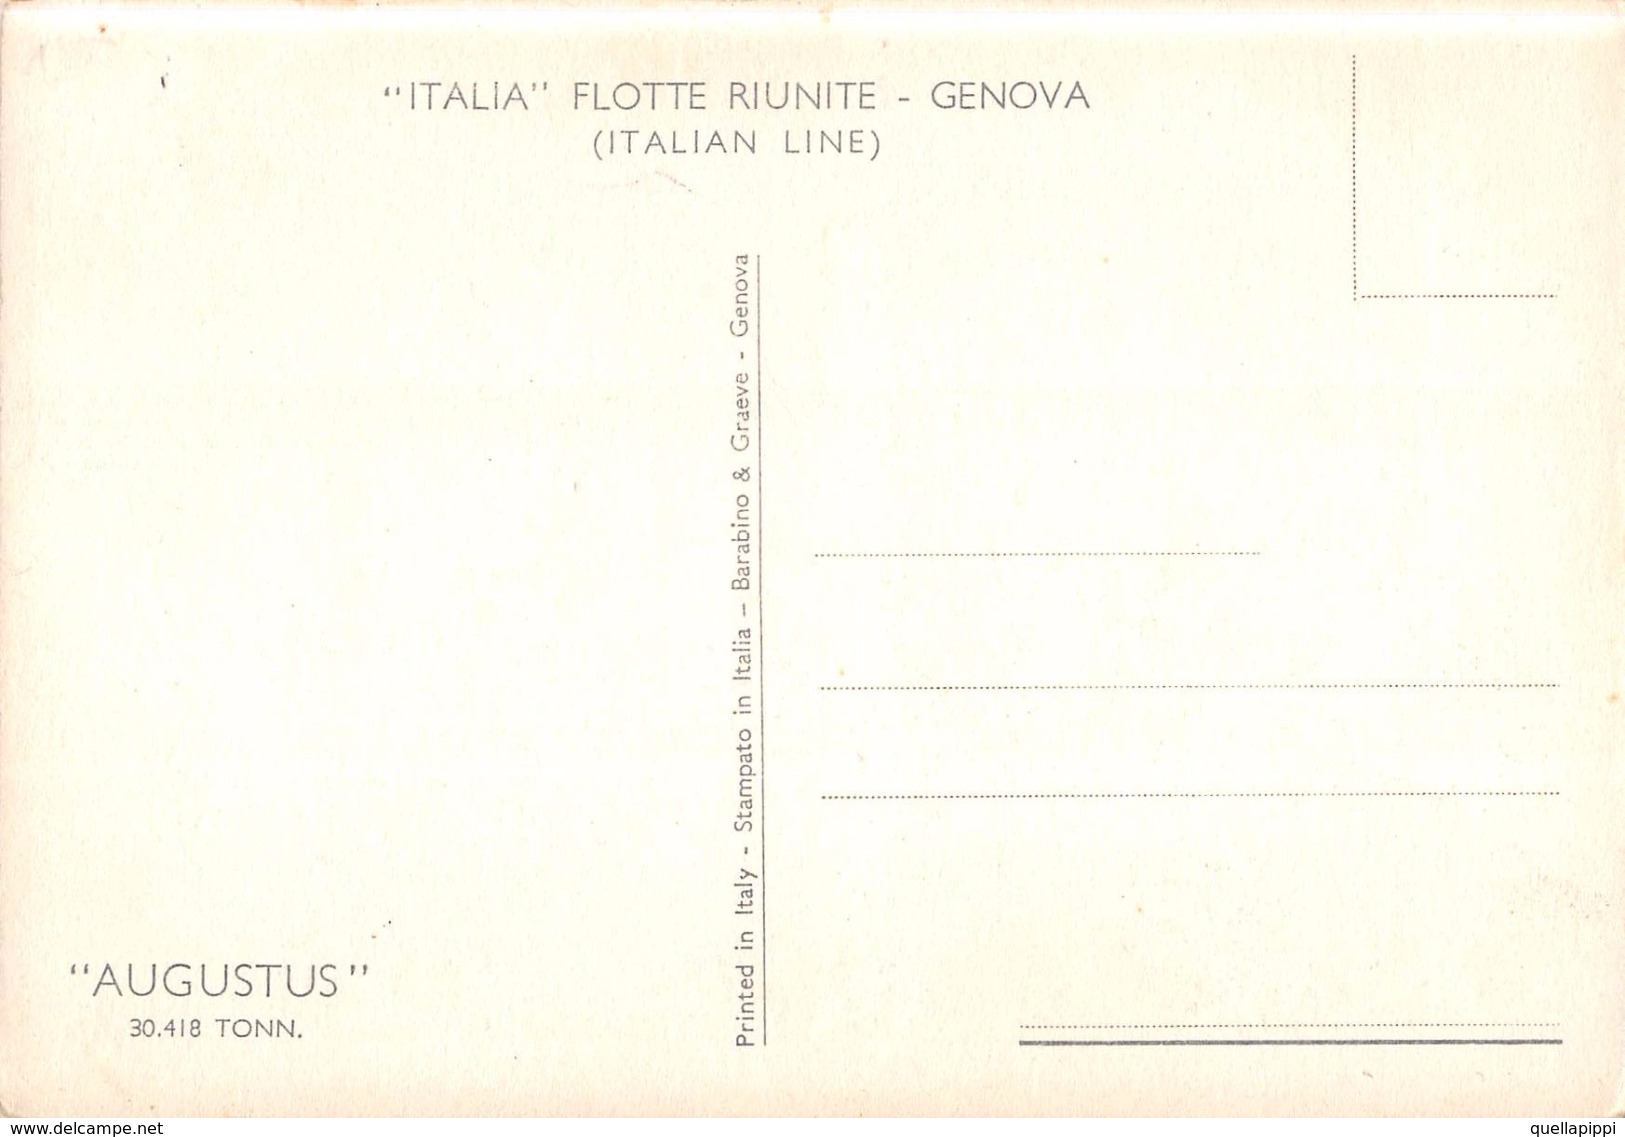 05422 "MOTONAVE AUGUSTUS 30418 TONN - ITALIA FLOTTE RIUNITE - GENOVA"  CART NON SPED - Banken